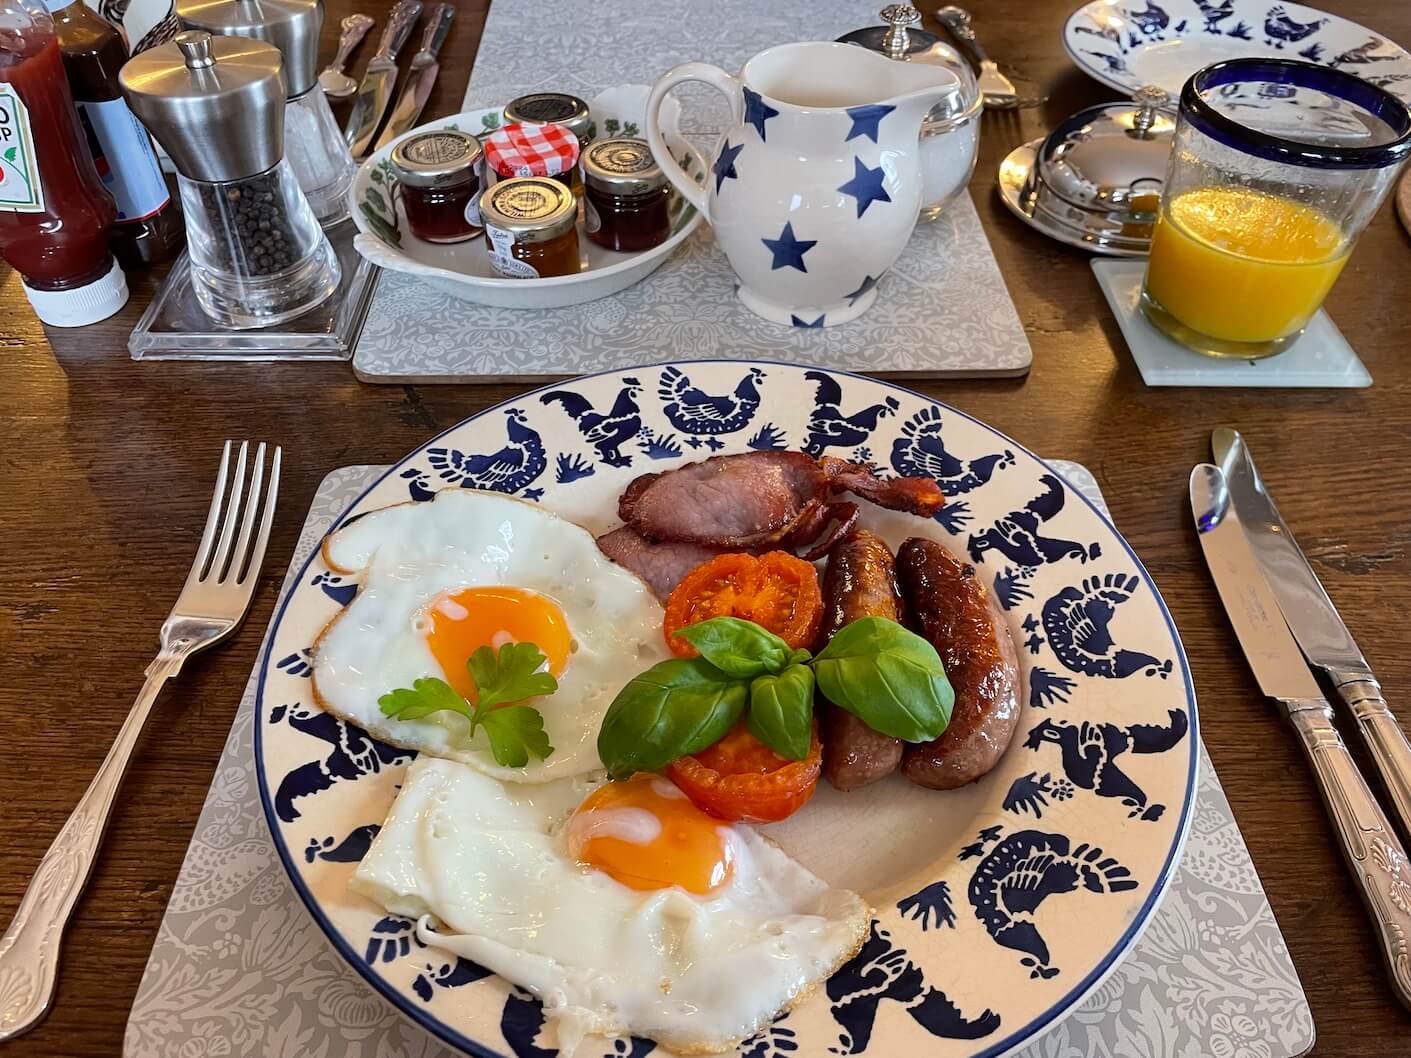 A full Suffolk breakfast at Rectory Manor Hotel